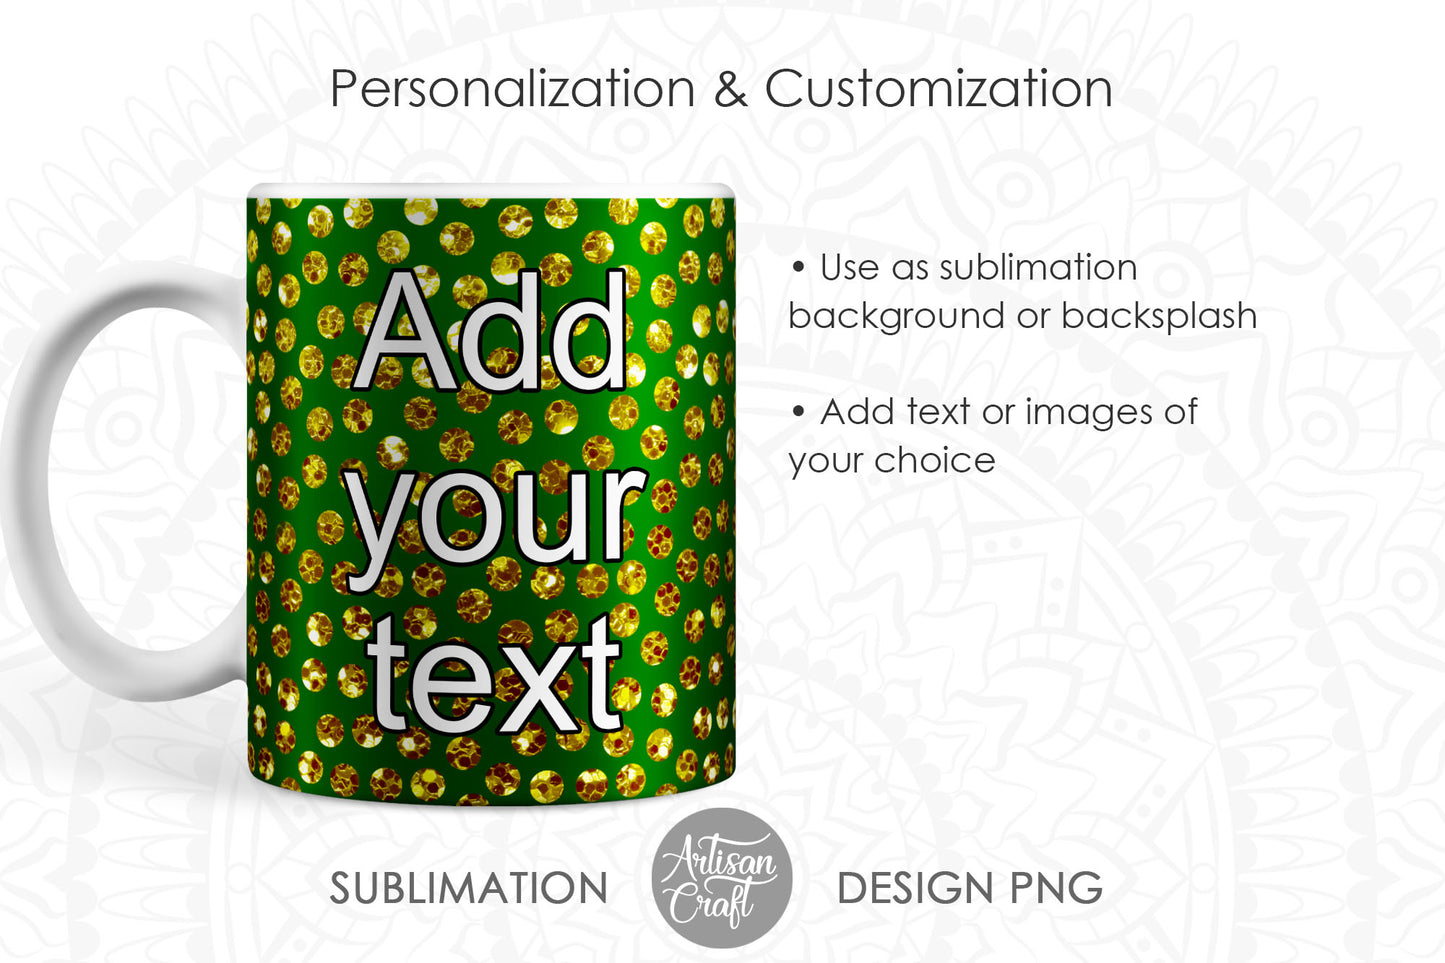 Sublimation mug designs, polka dot mugs